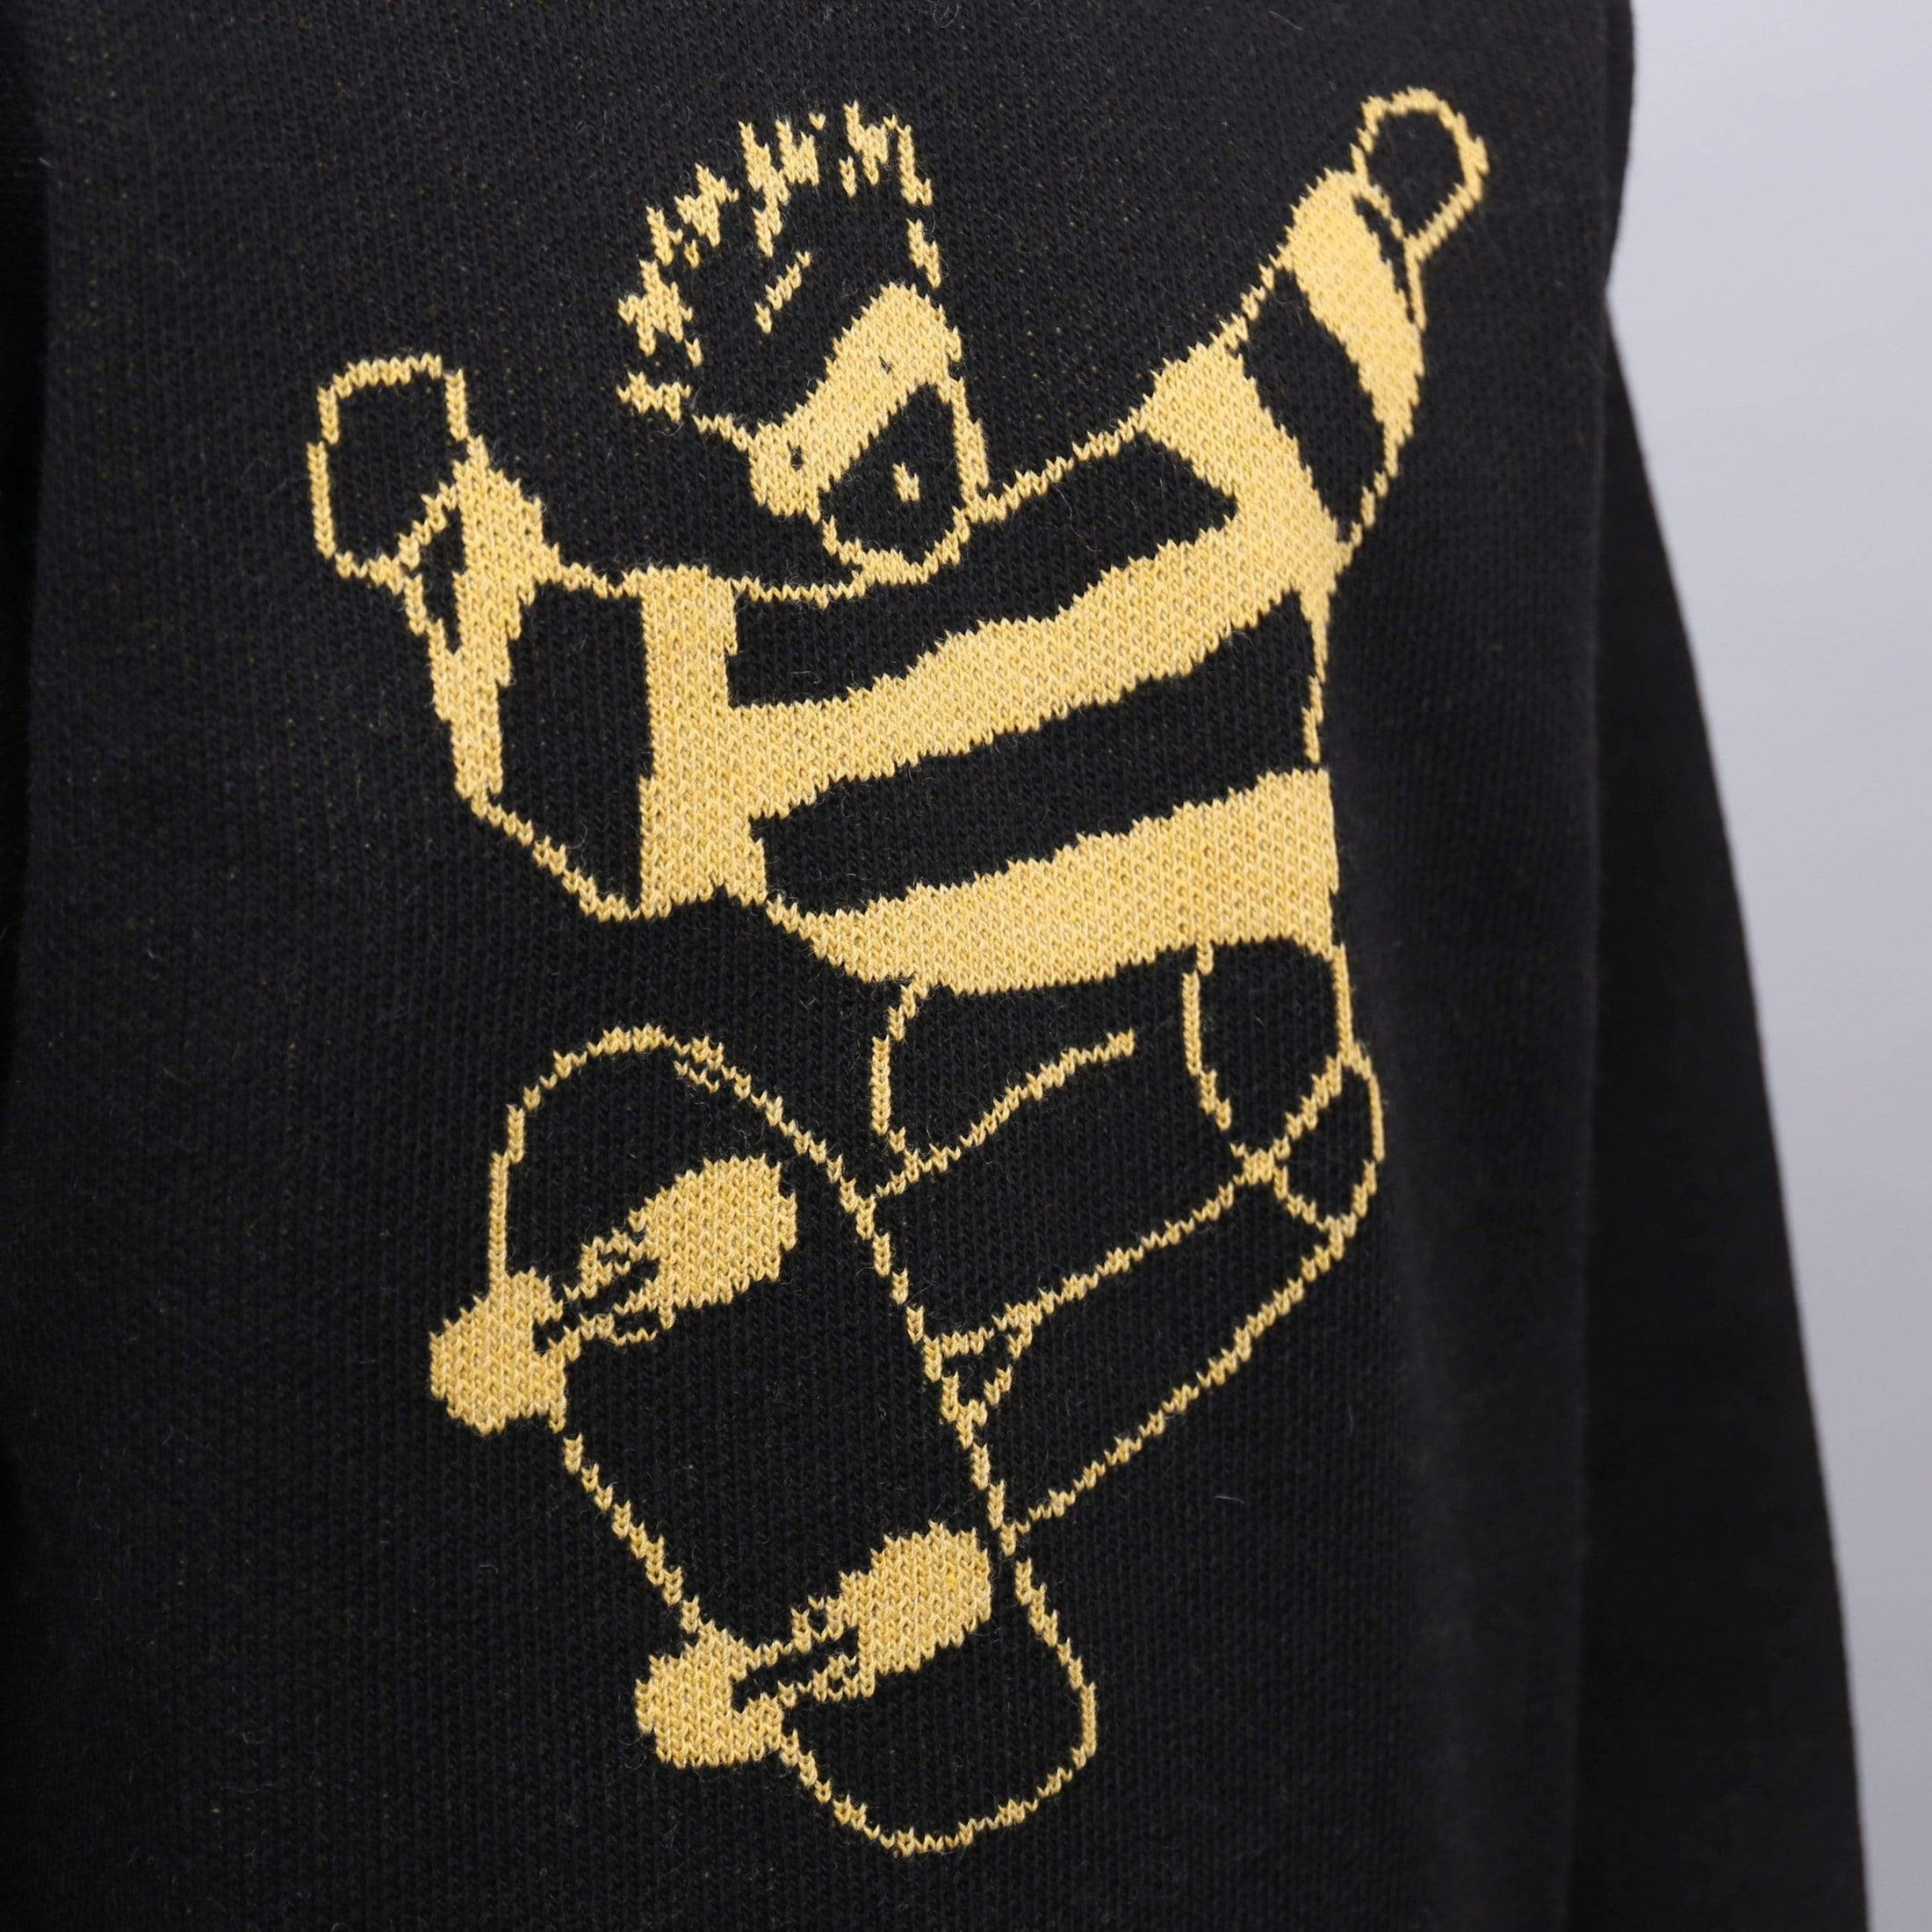 Polar Skate Dude Knit Sweater Black